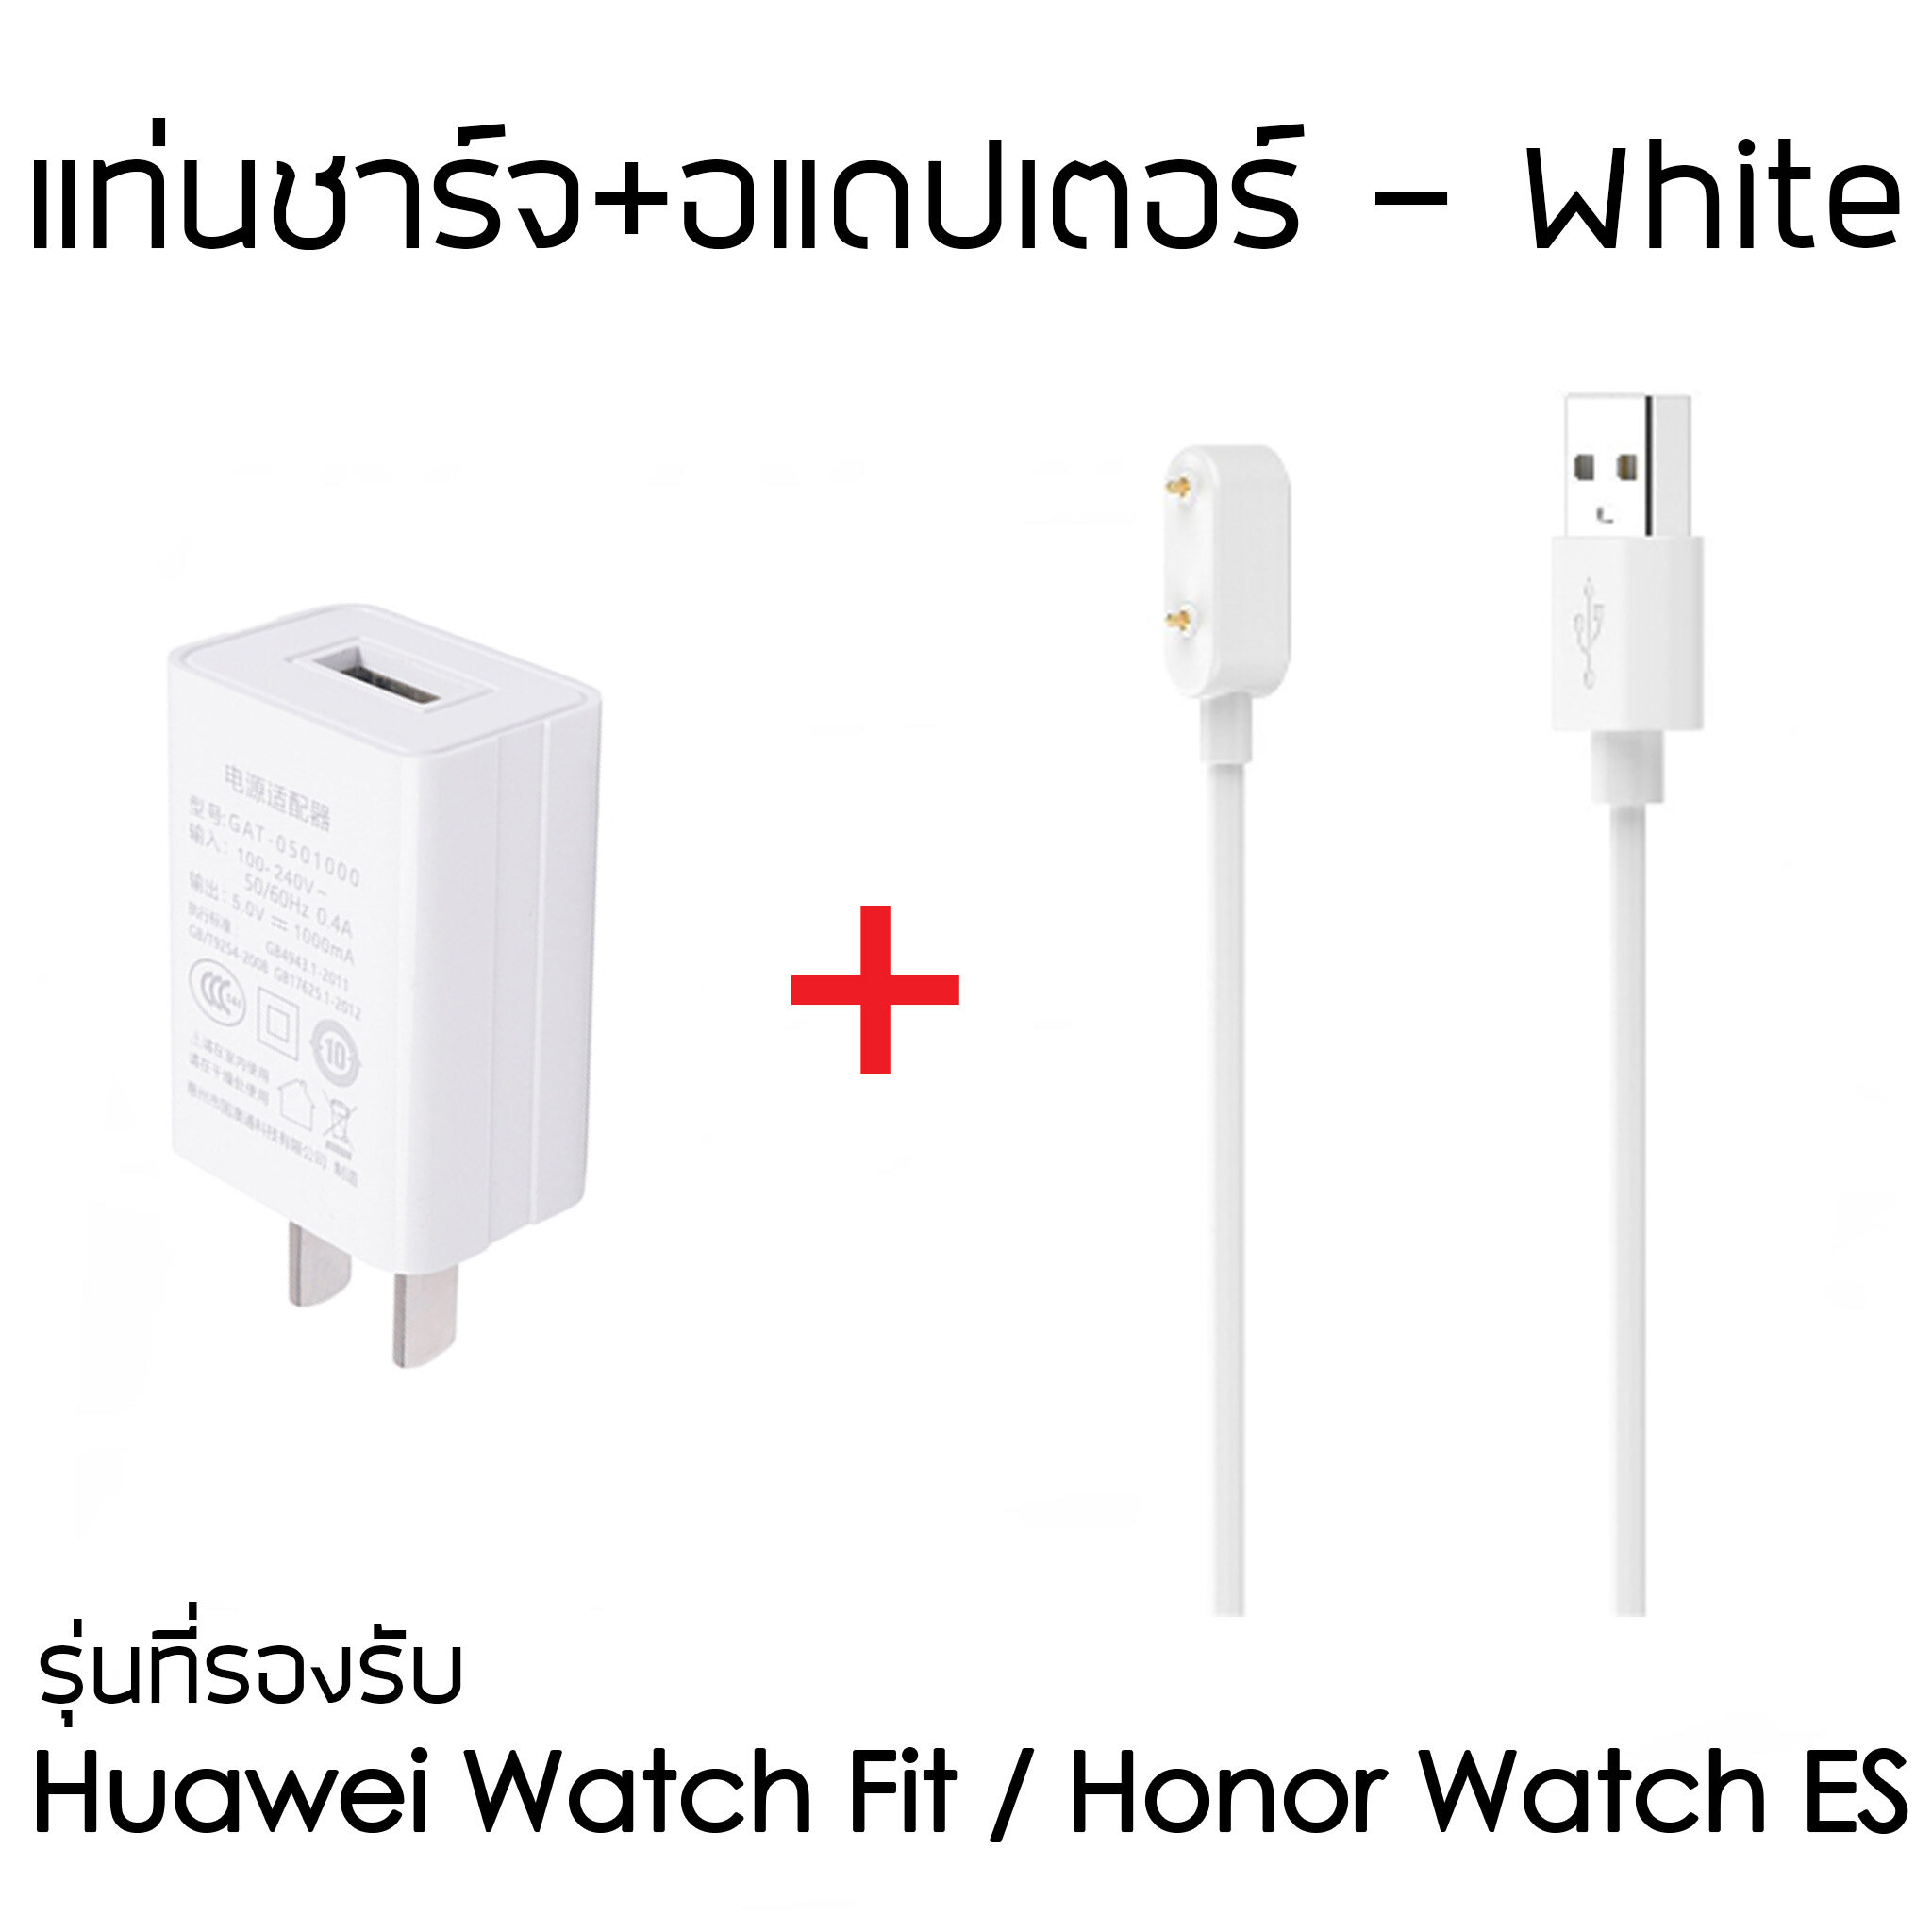 As แท่นชาร์จ For Huawei Watch GT2 Pro / Watch Fit / GT2 / GT / Magic Watch น้ำหนักเบา พกพาง่าย พร้อม Adapter และสาย USB